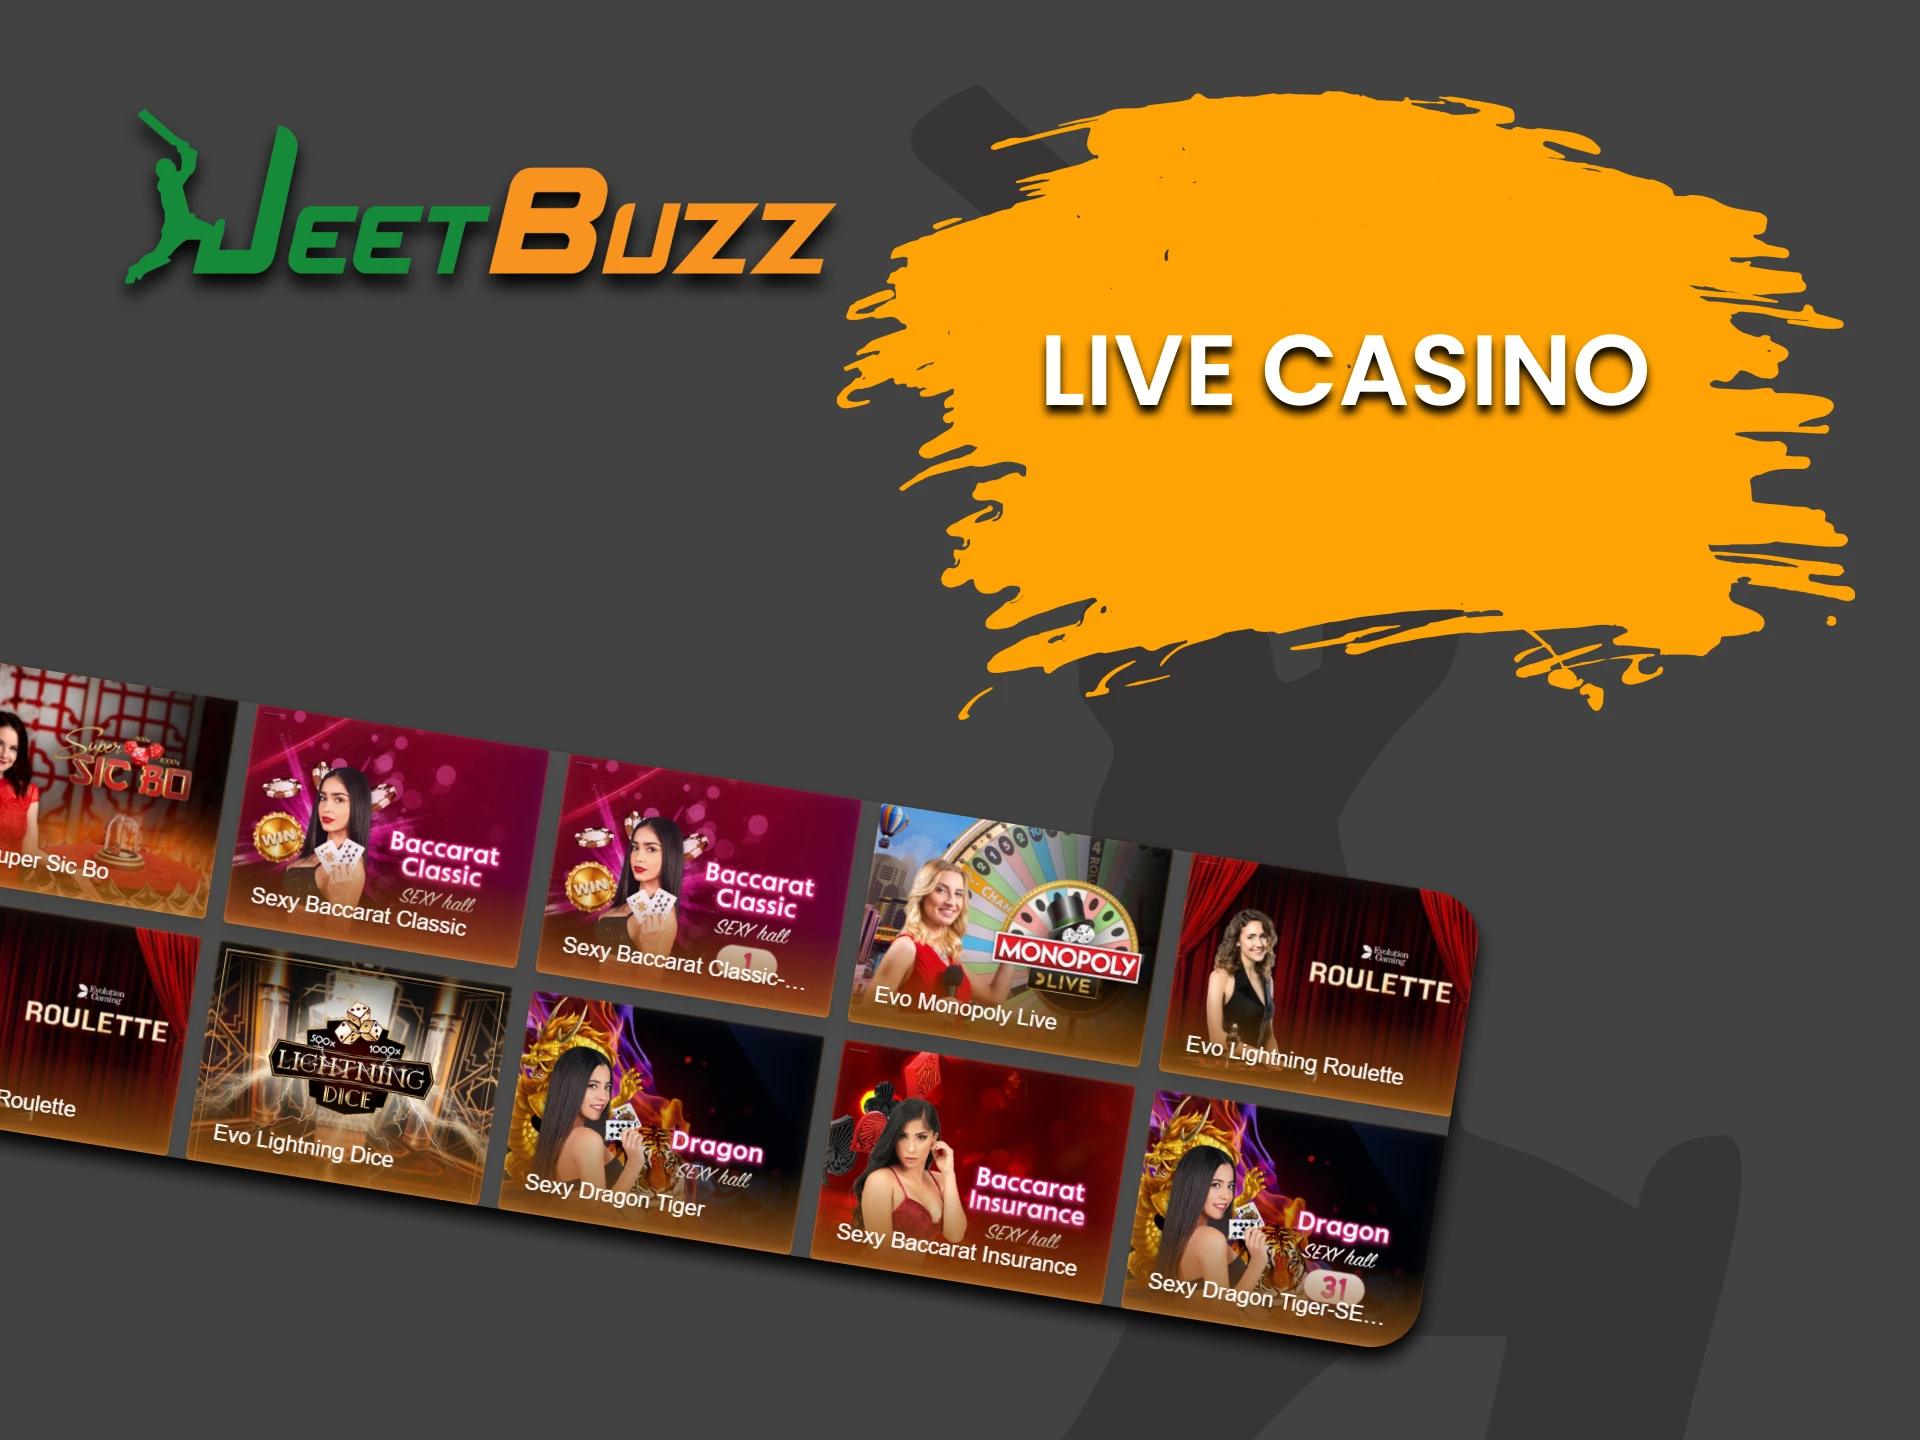 Jeetbuzz live casino